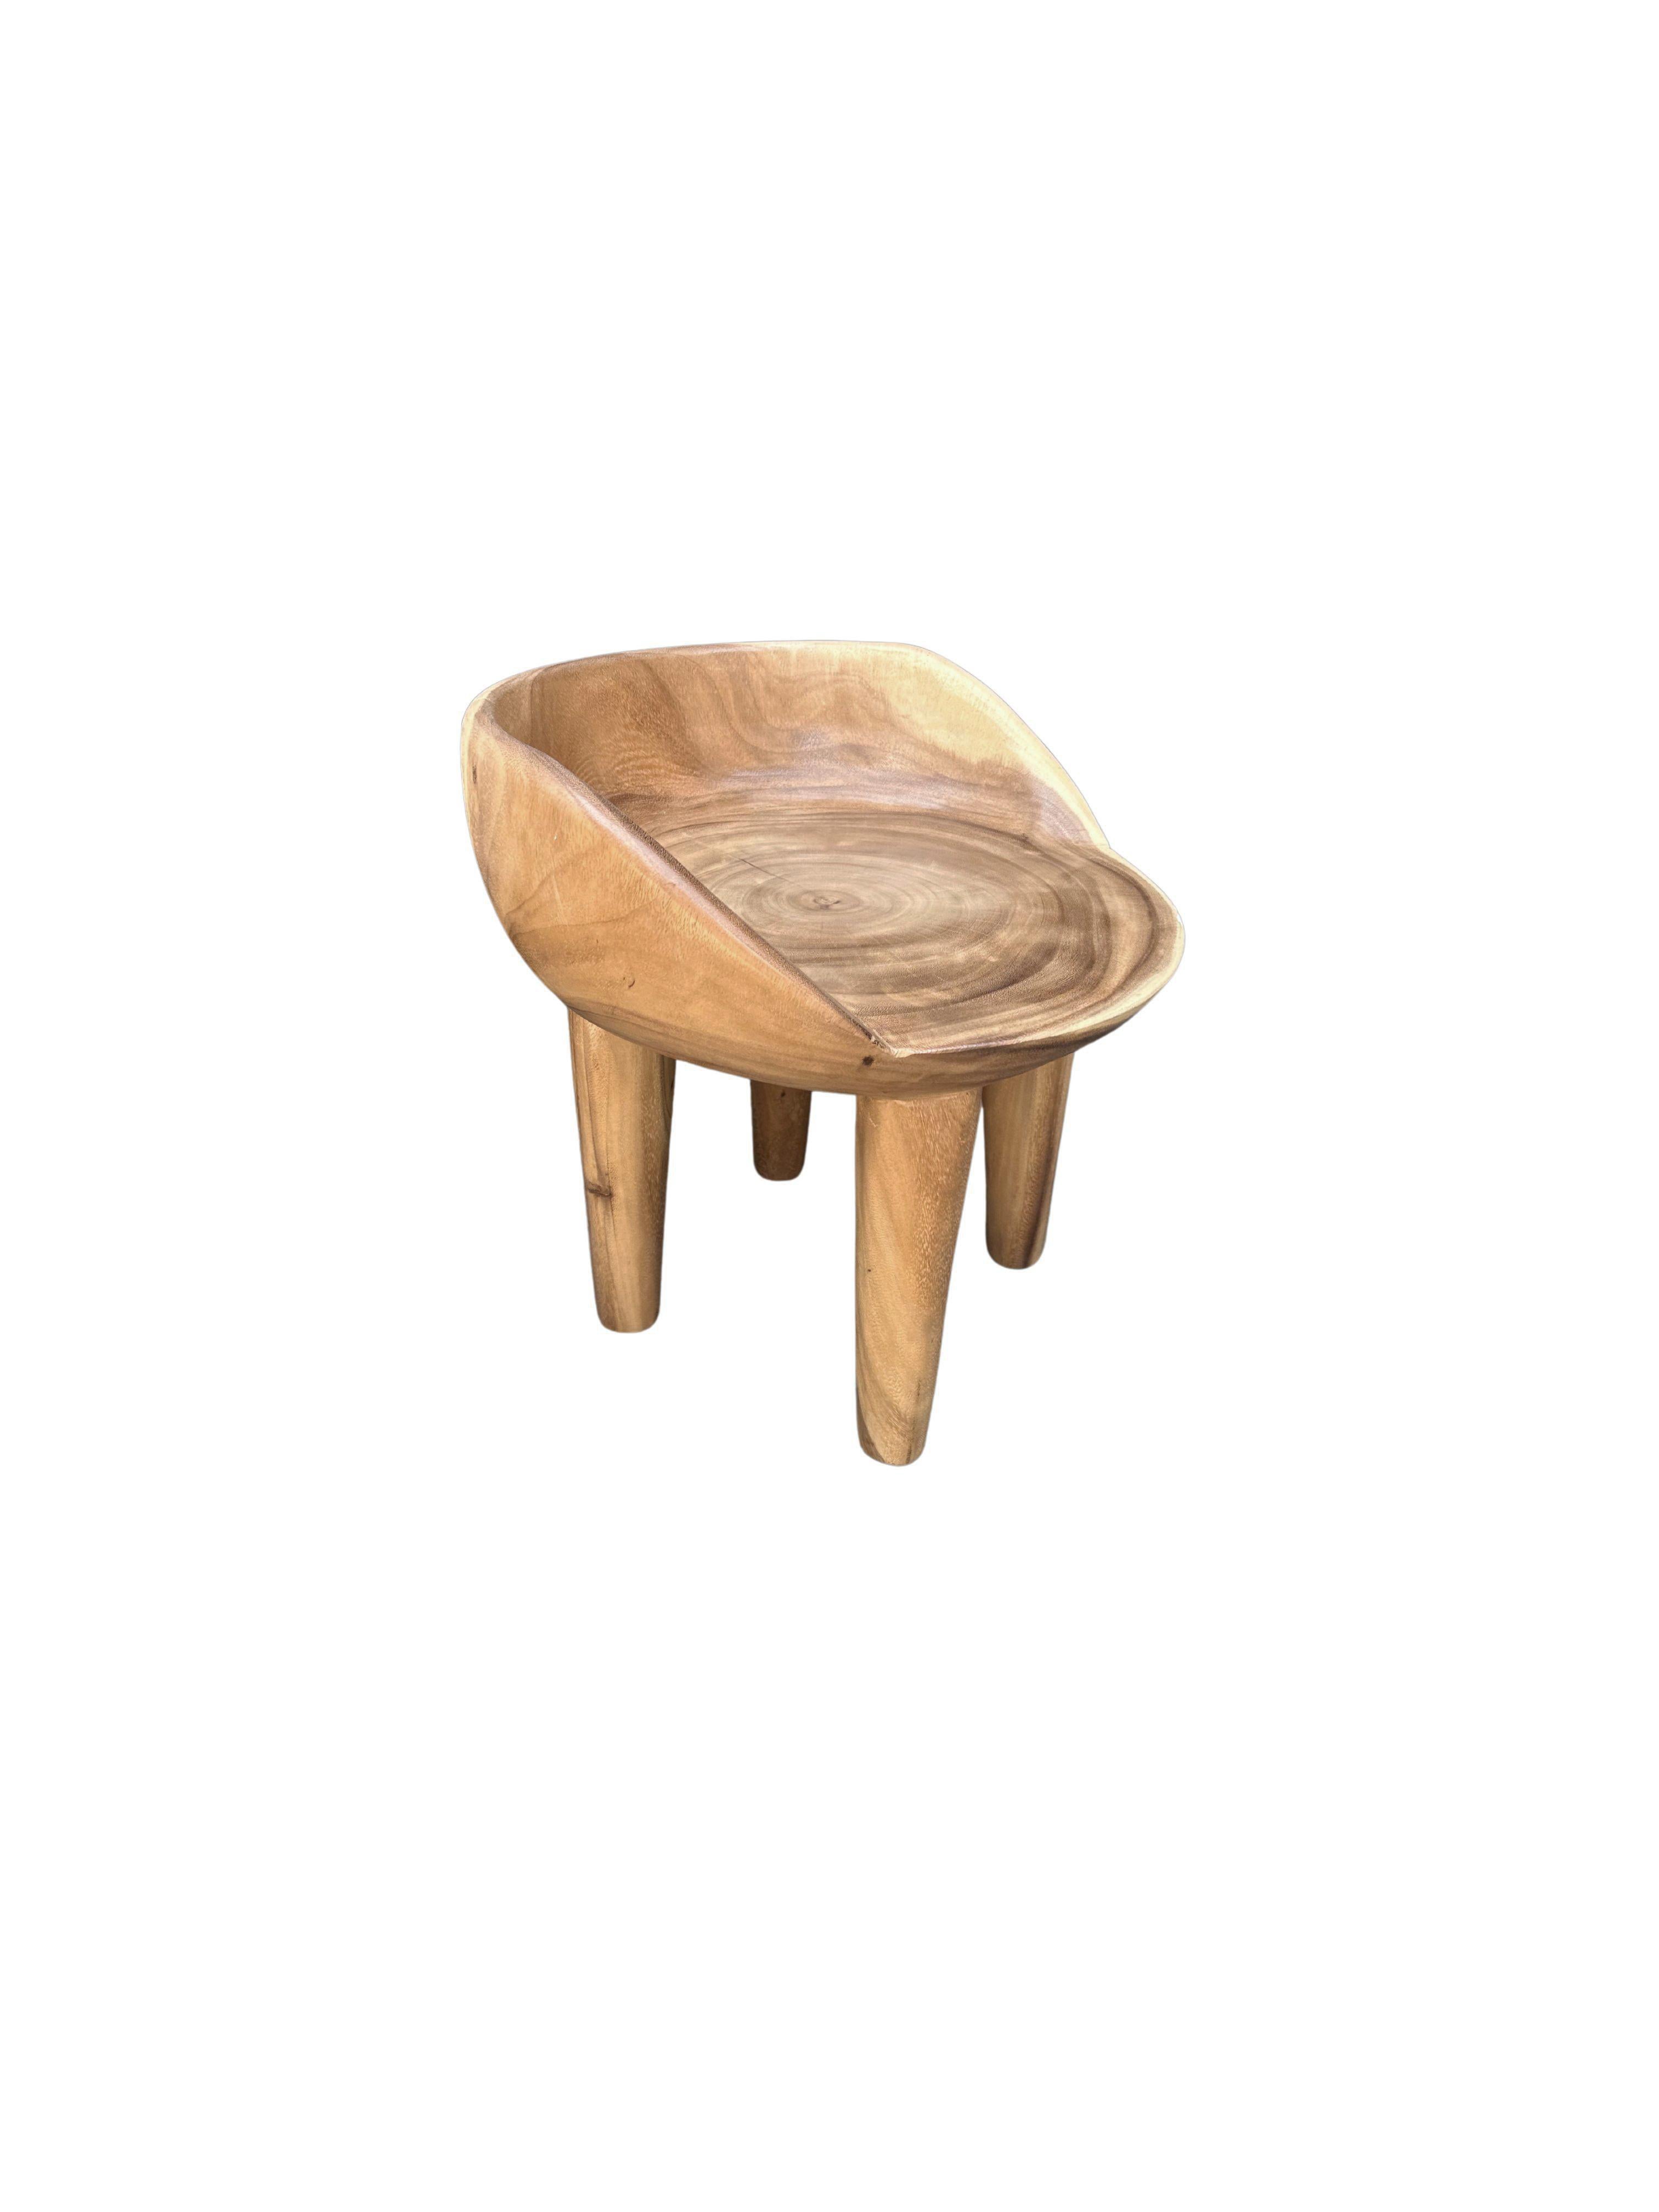 Indonesian Sculptural Suar Wood Chair Modern Organic For Sale